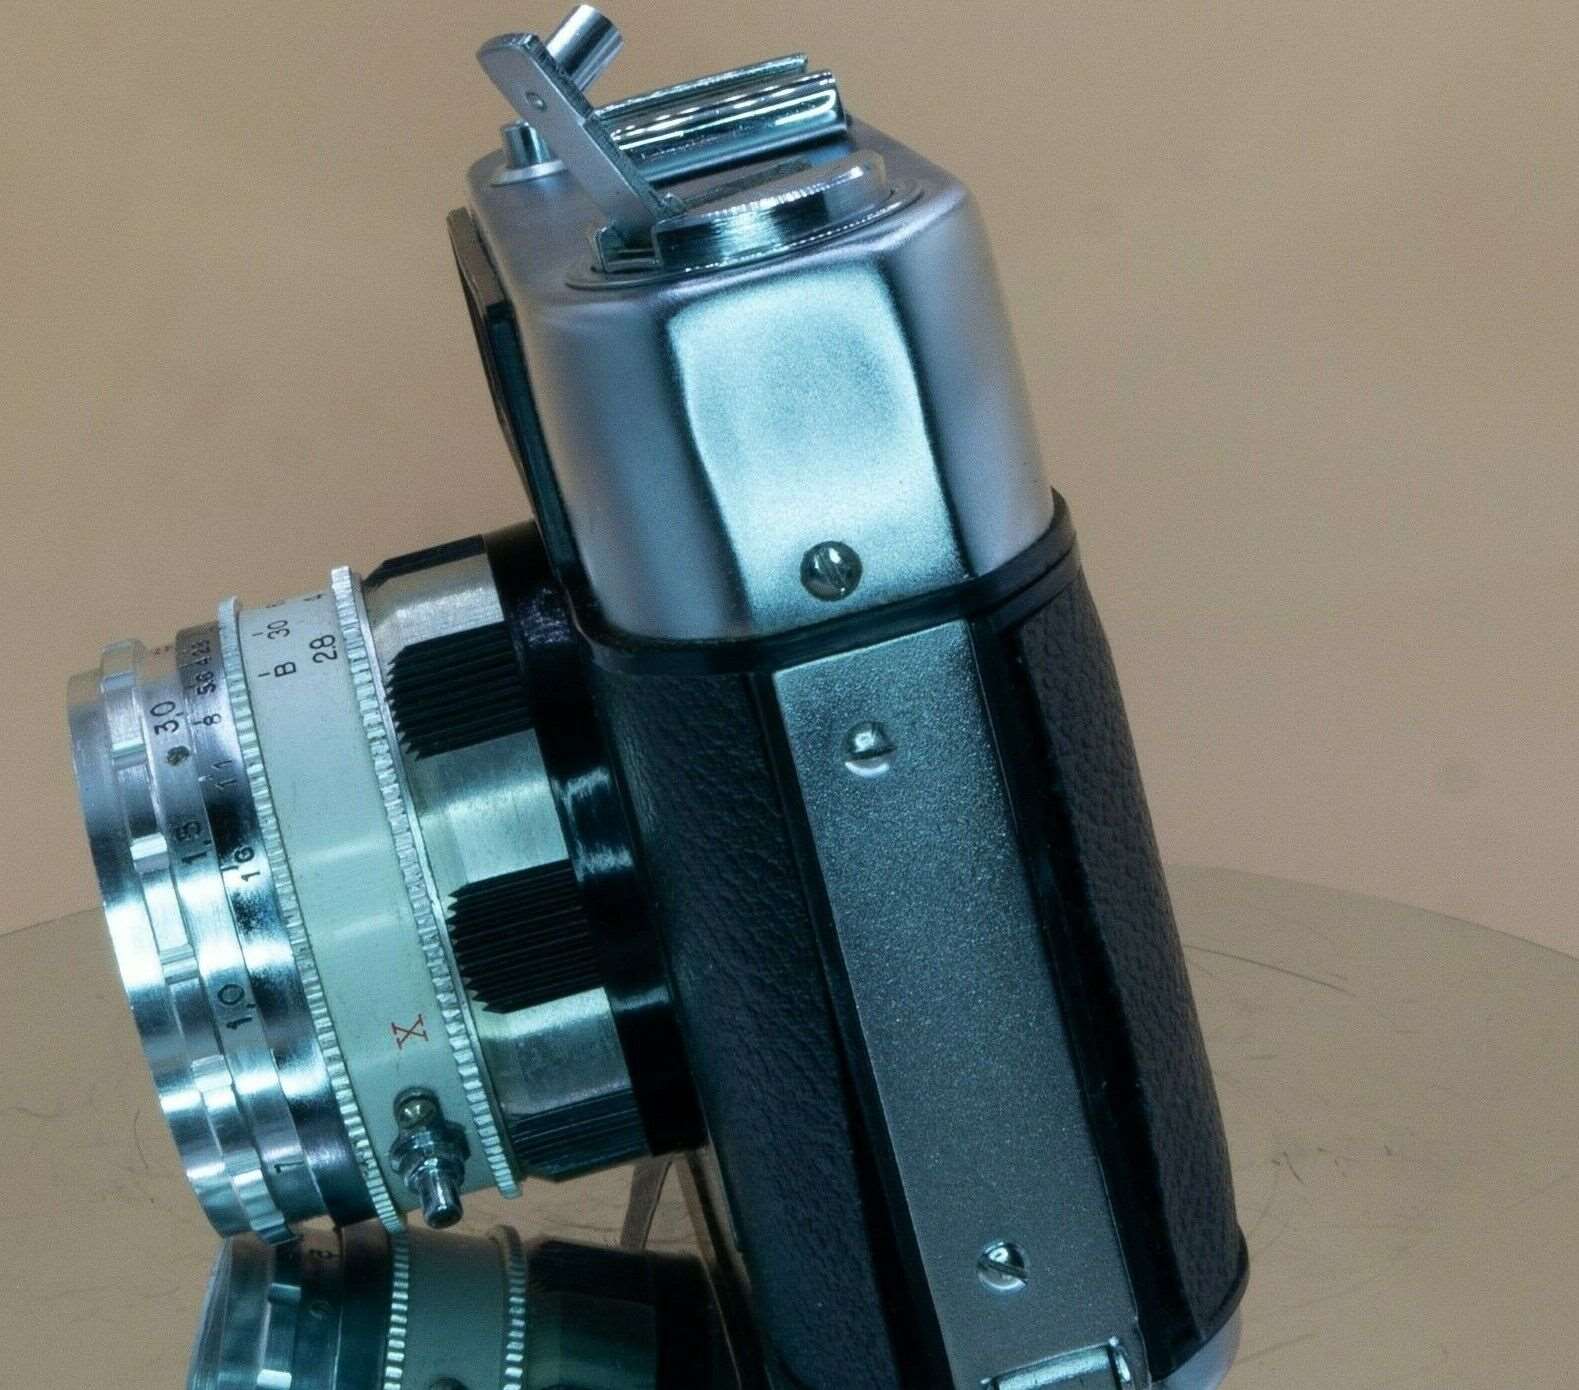 Halina Paulette 35mm Rangefinder Collector's Camera & Original Leather Case